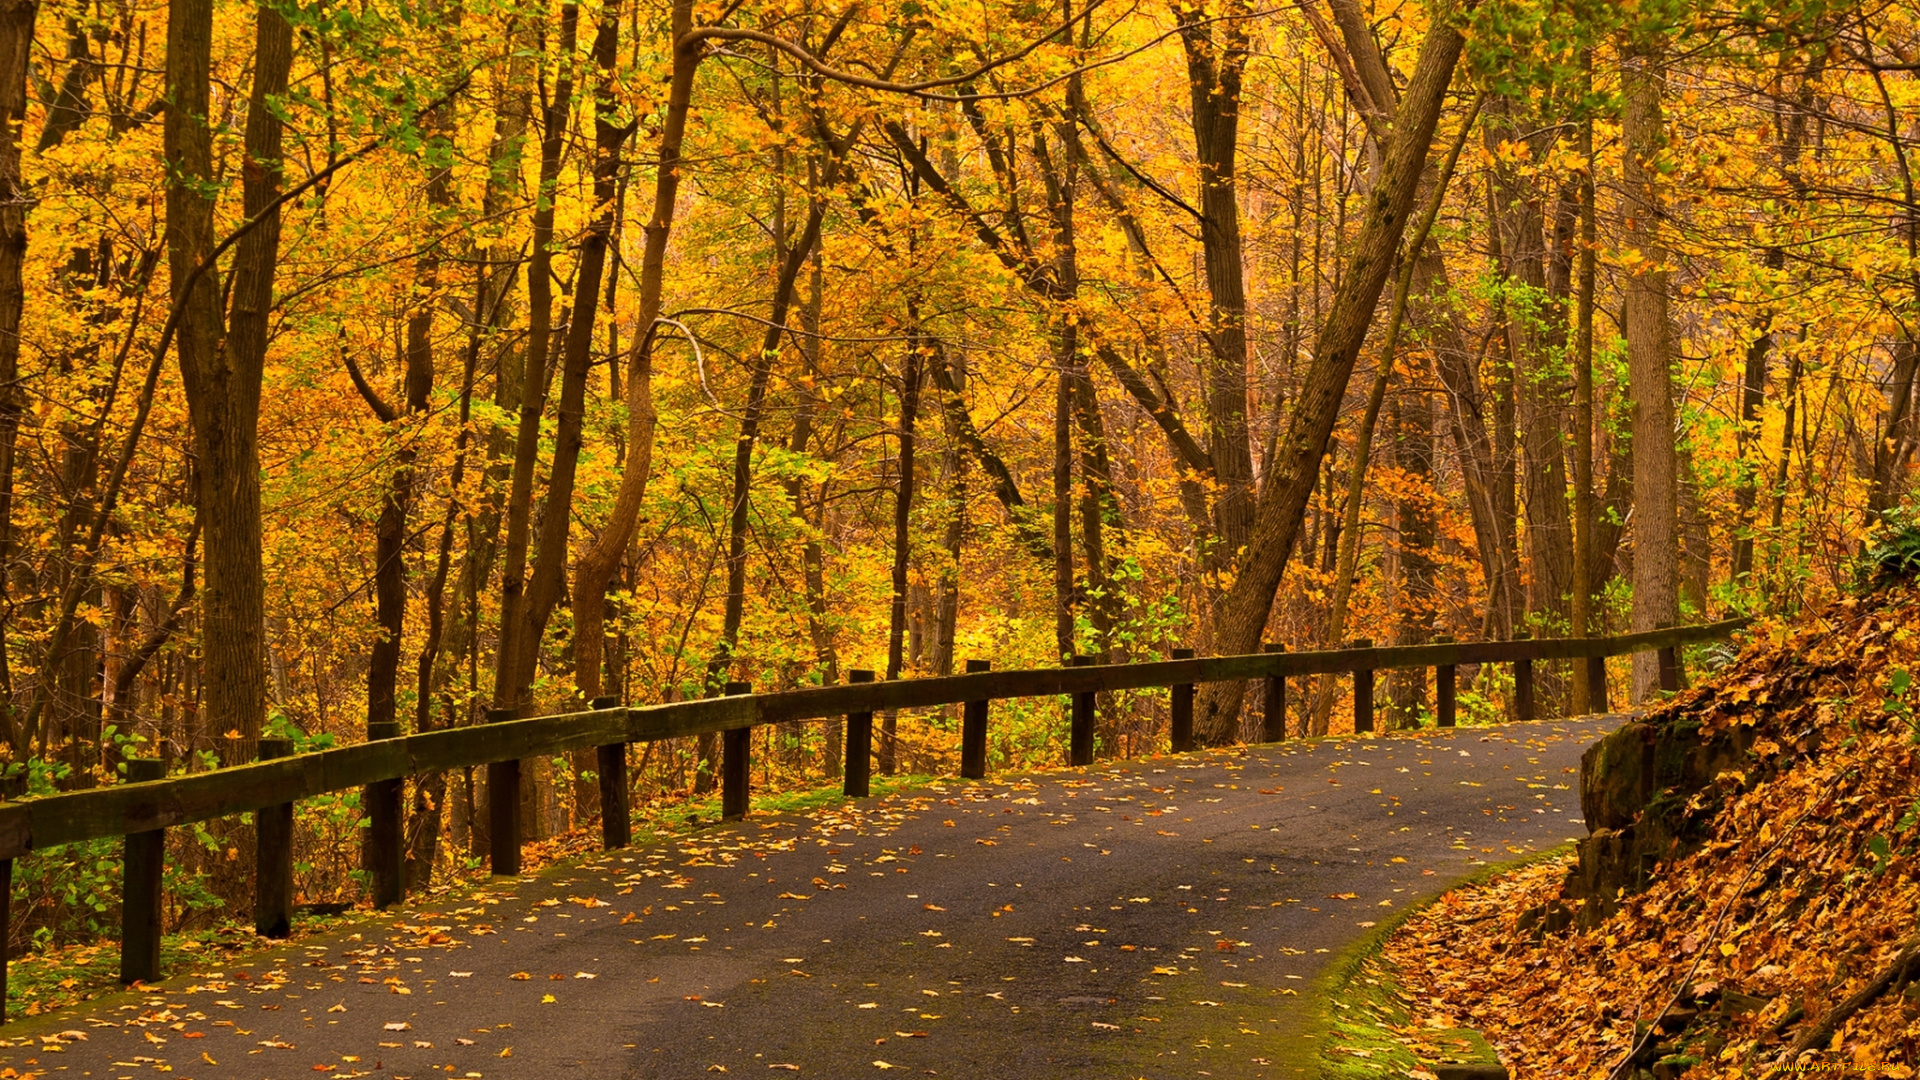 природа, дороги, осень, листья, парк, лес, дорога, деревья, nature, path, road, colorful, leaves, trees, park, forest, walk, colors, fall, autumn